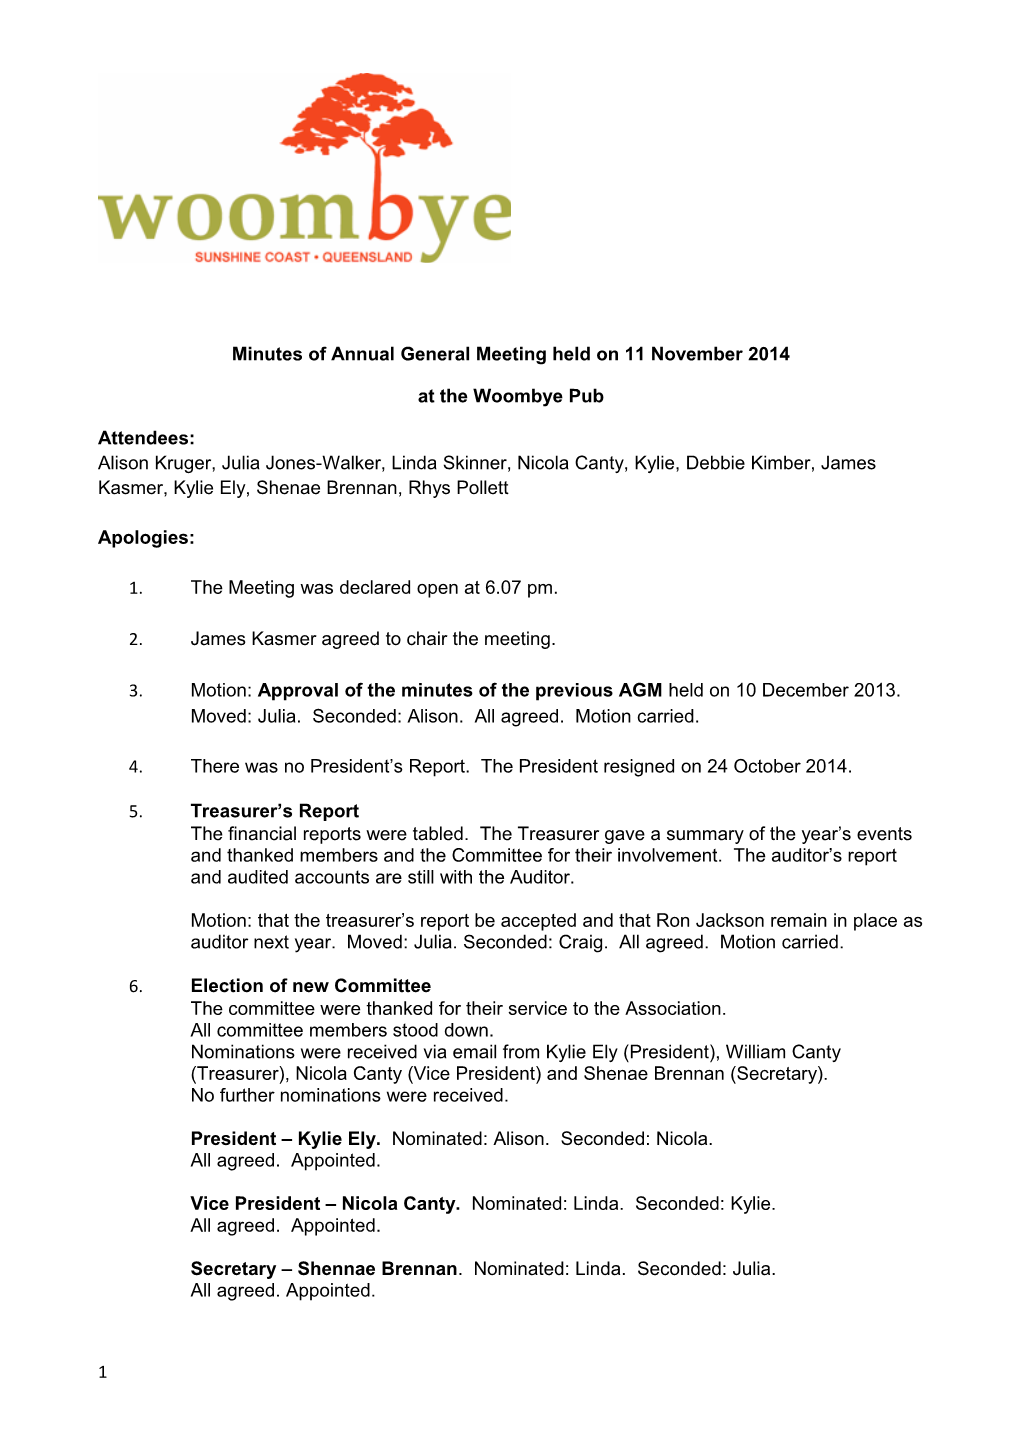 Minutes of Annual General Meeting Held on 11November2014